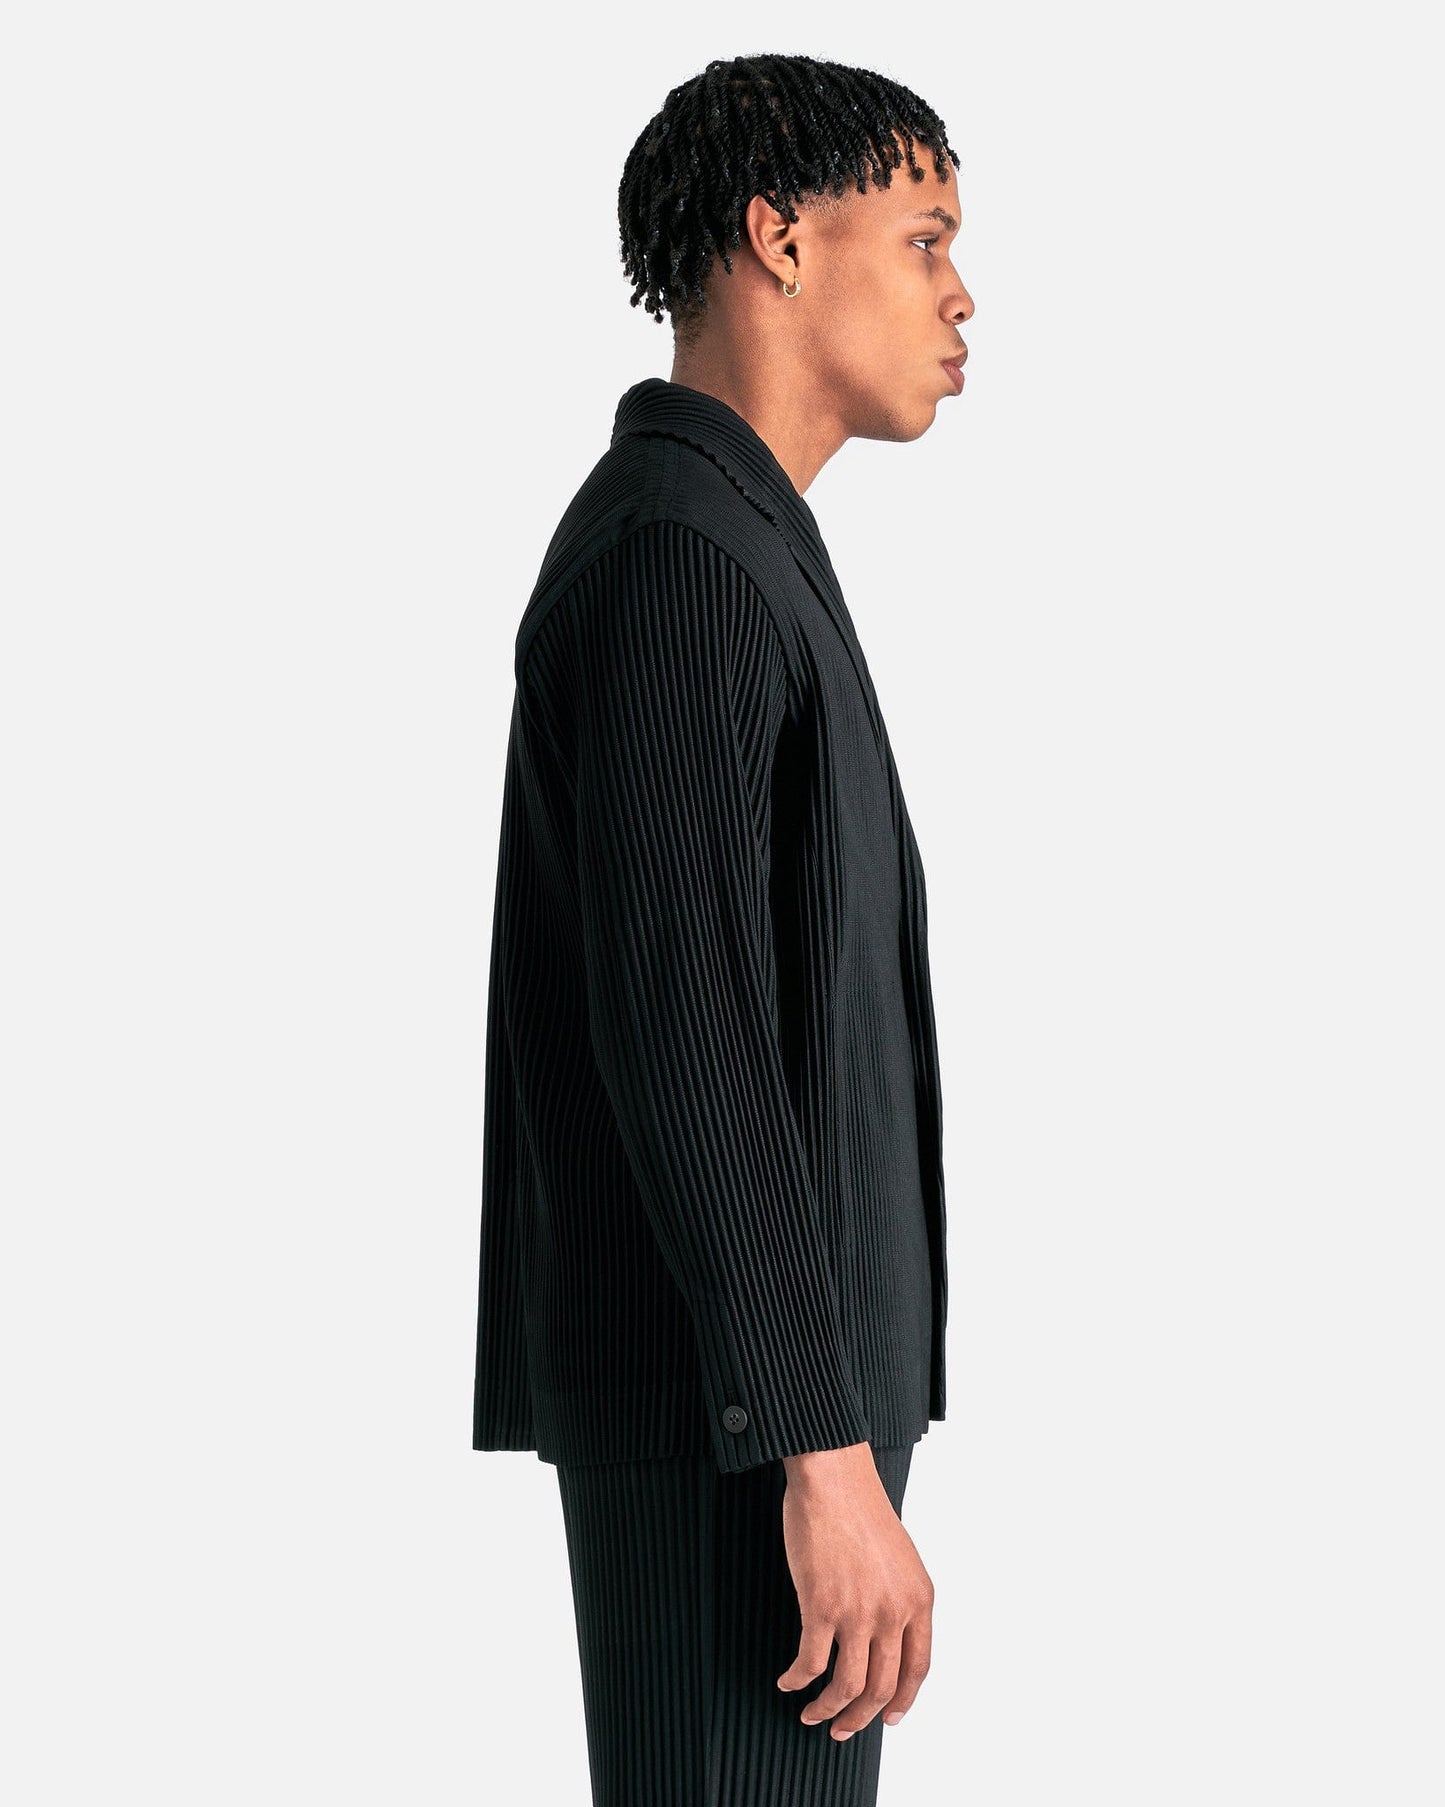 Homme Plissé Issey Miyake Men's Jackets Basics Blazer in Black